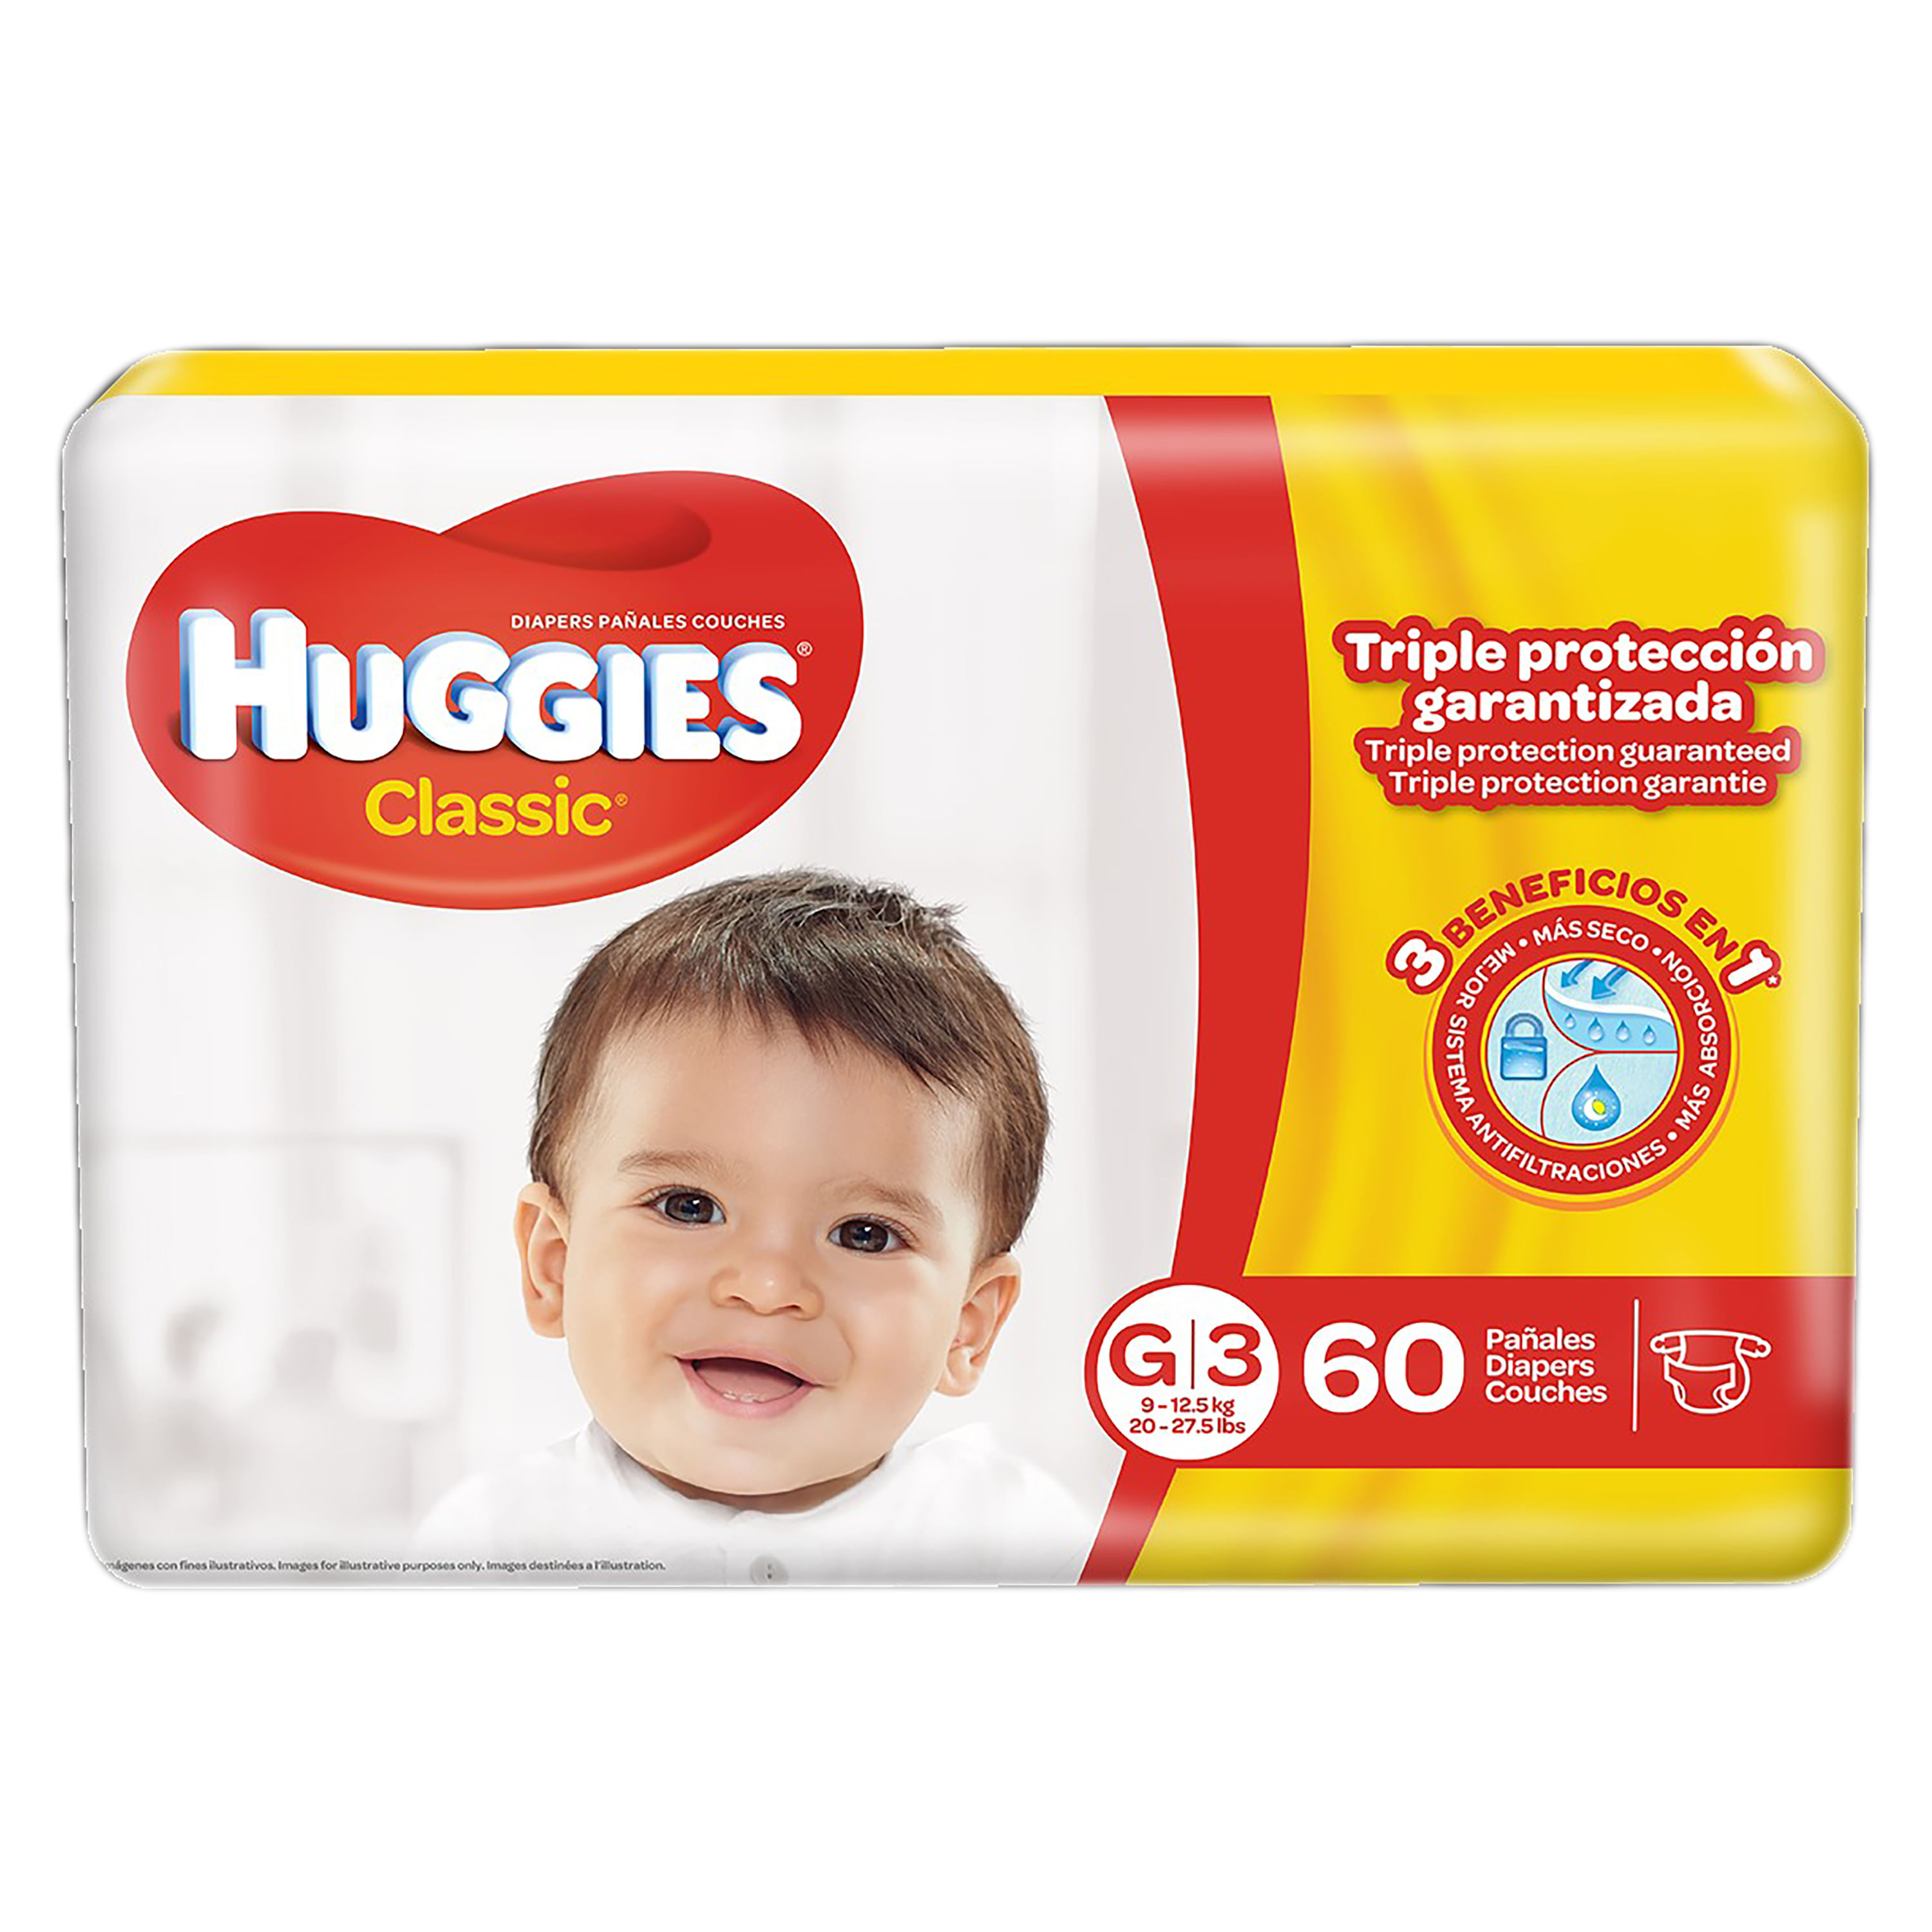 Comprar Pañales Pampers Baby-Dry, Talla 3, 6-10kg - 52Uds